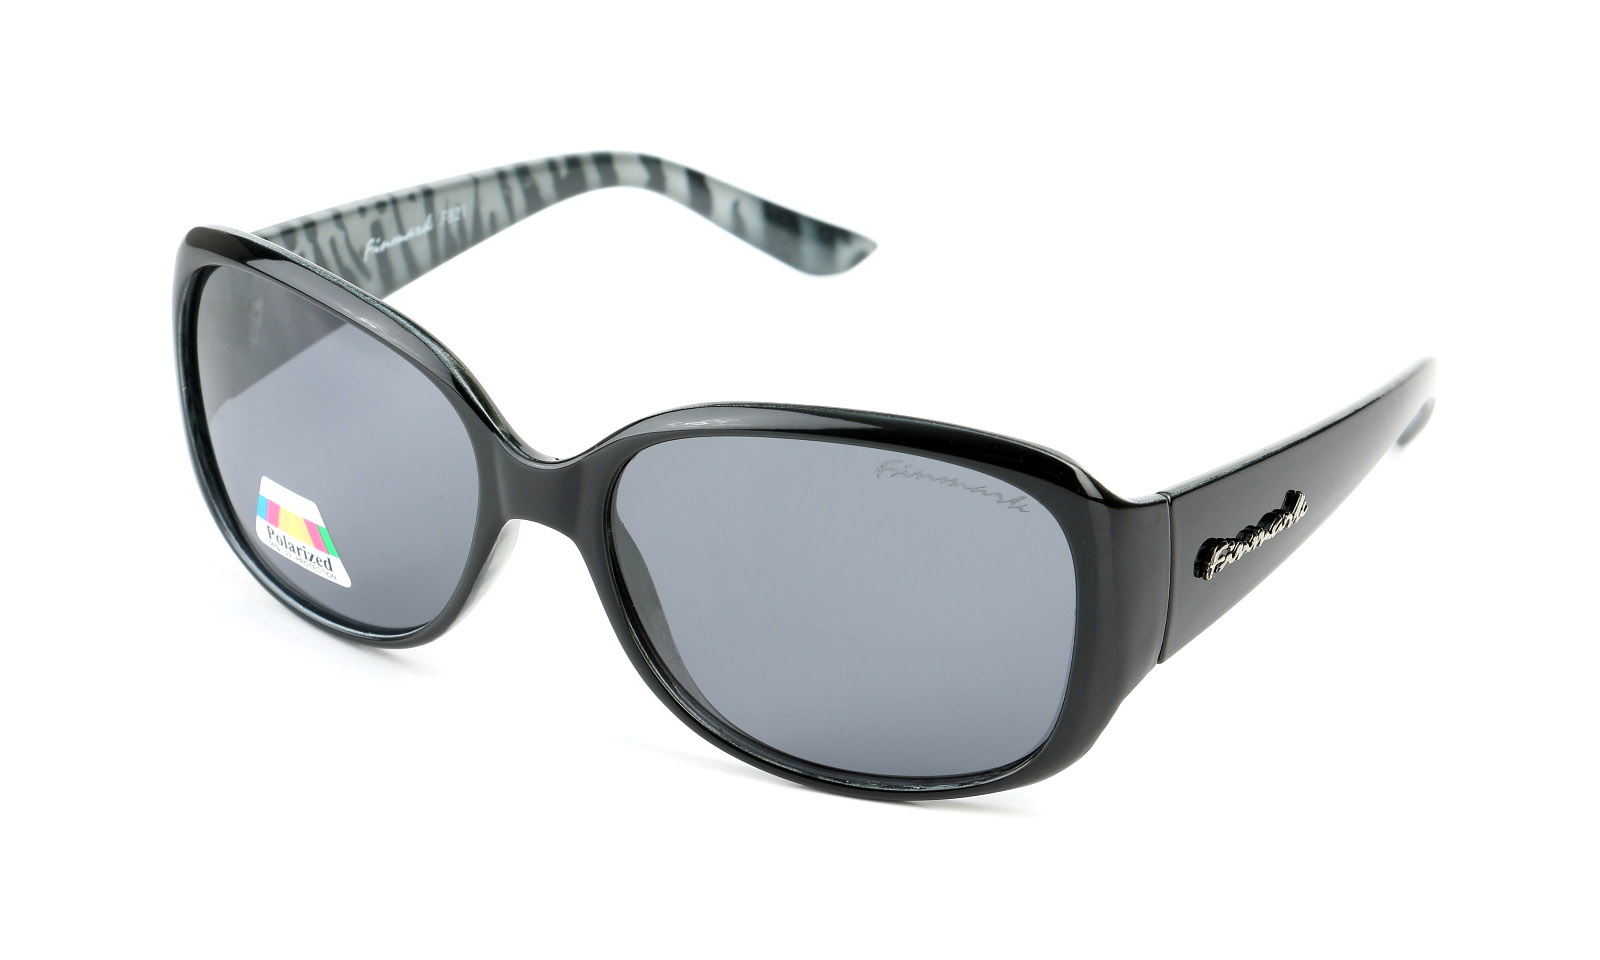 Fashion sunglasses with polarisation lenses